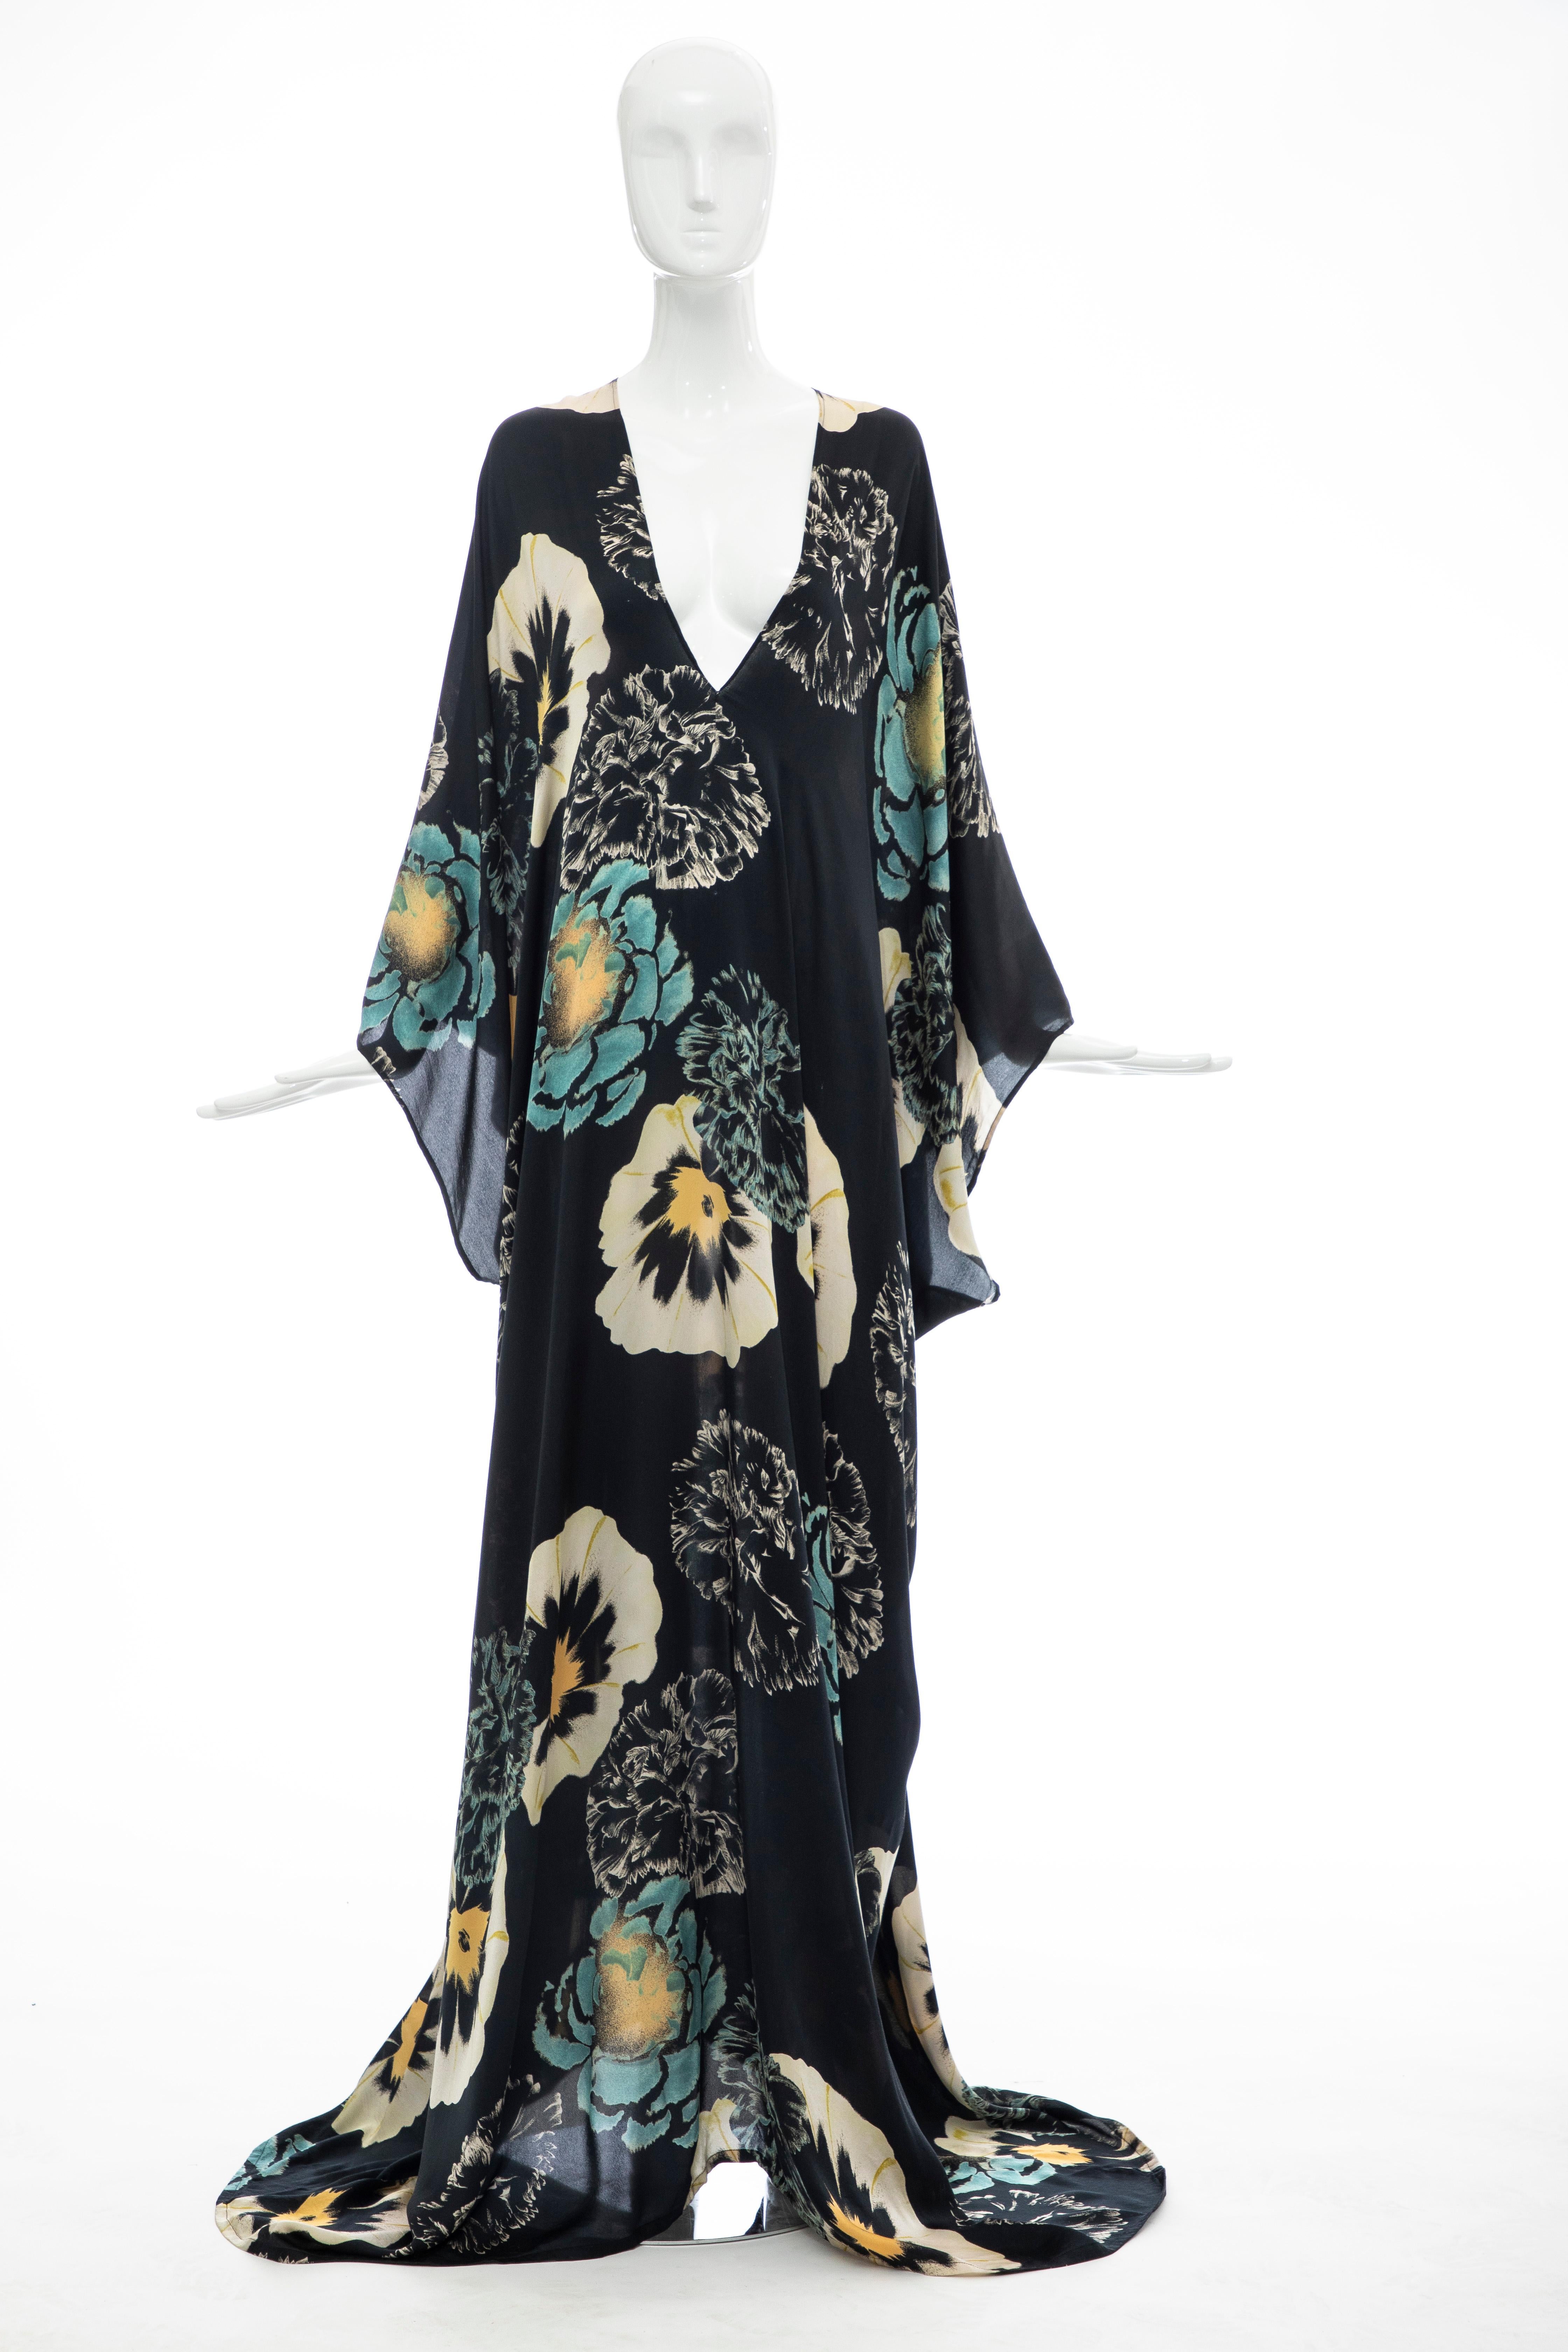 Dries Van Noten Runway Spring 2002 silk kaftan dress with V-neck and floral print throughout.

Belgium - Medium

Bust: 43, Waist: 43, Hip: 44, Length 70

